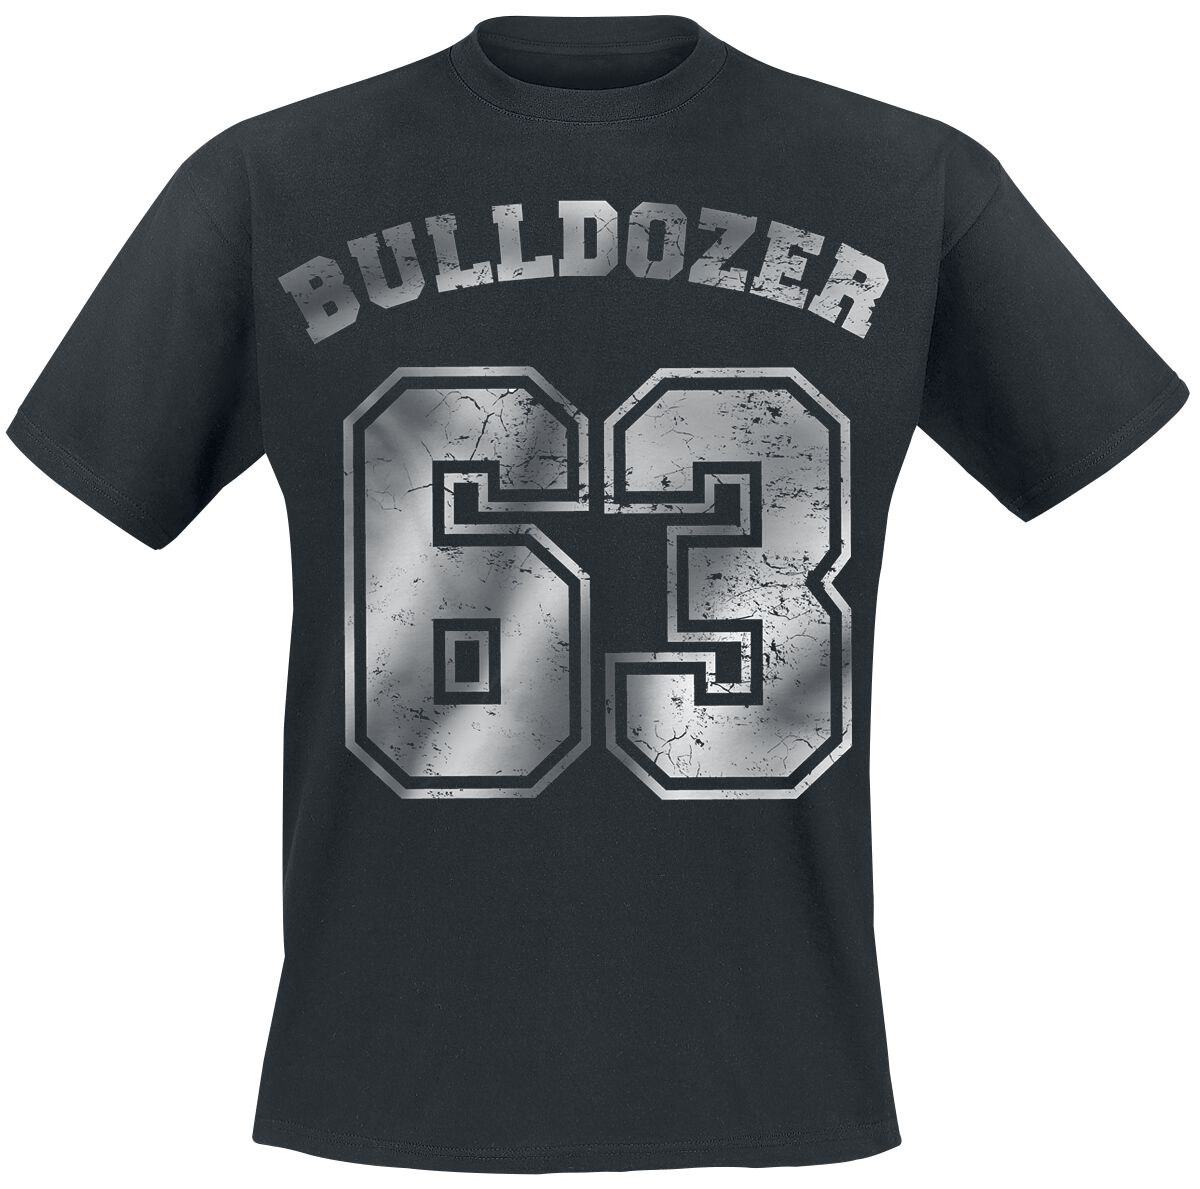 Bud Spencer Bulldozer T-Shirt black